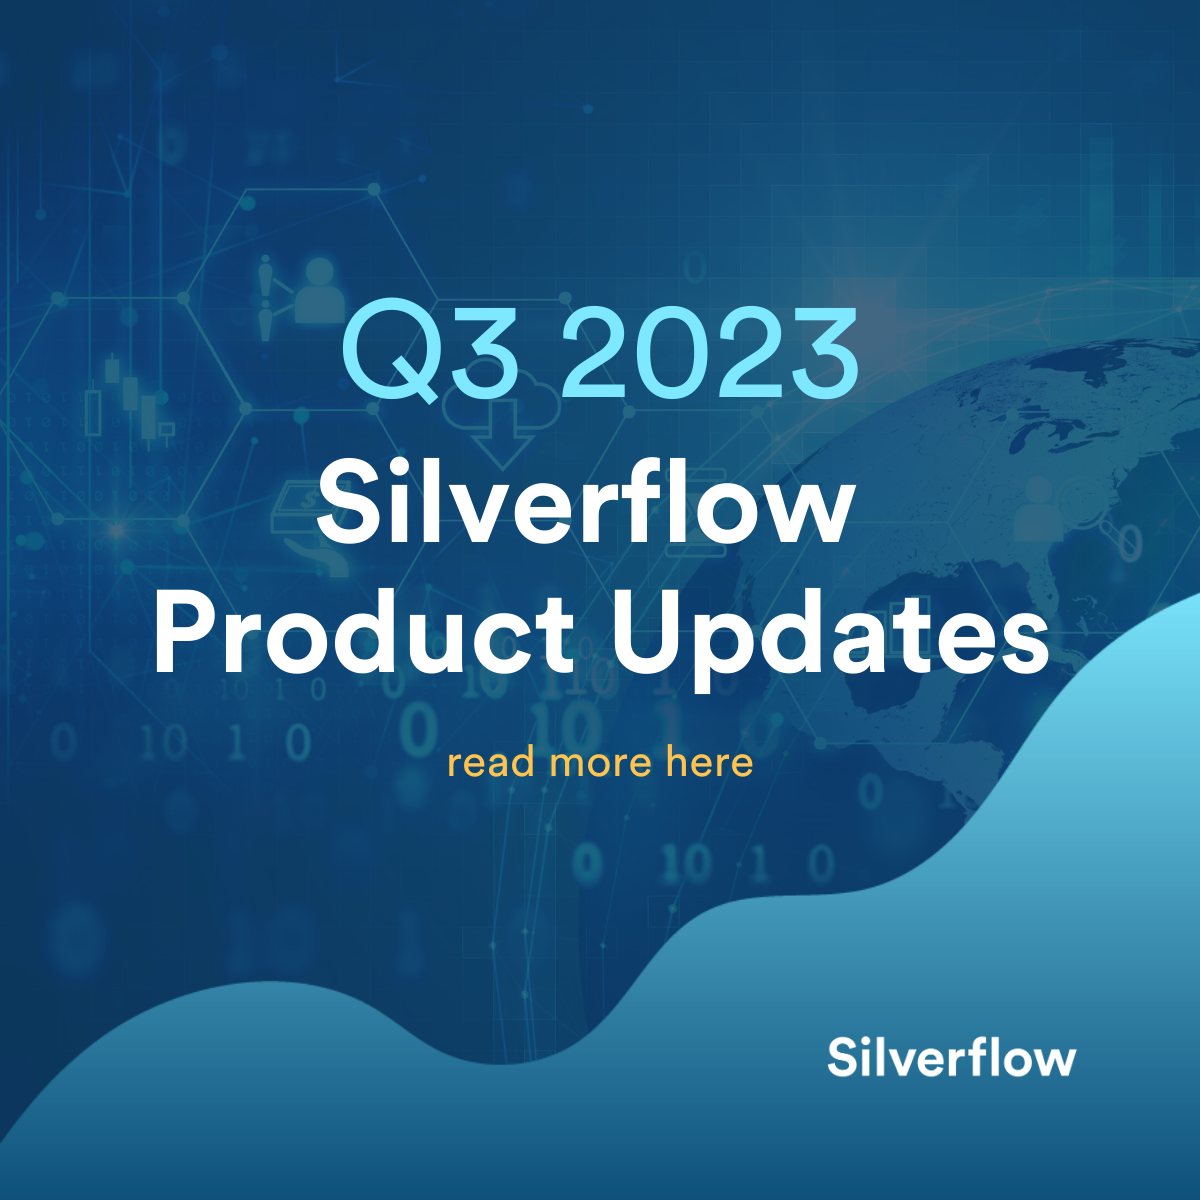 Q3 2023 Silverflow Product Updates